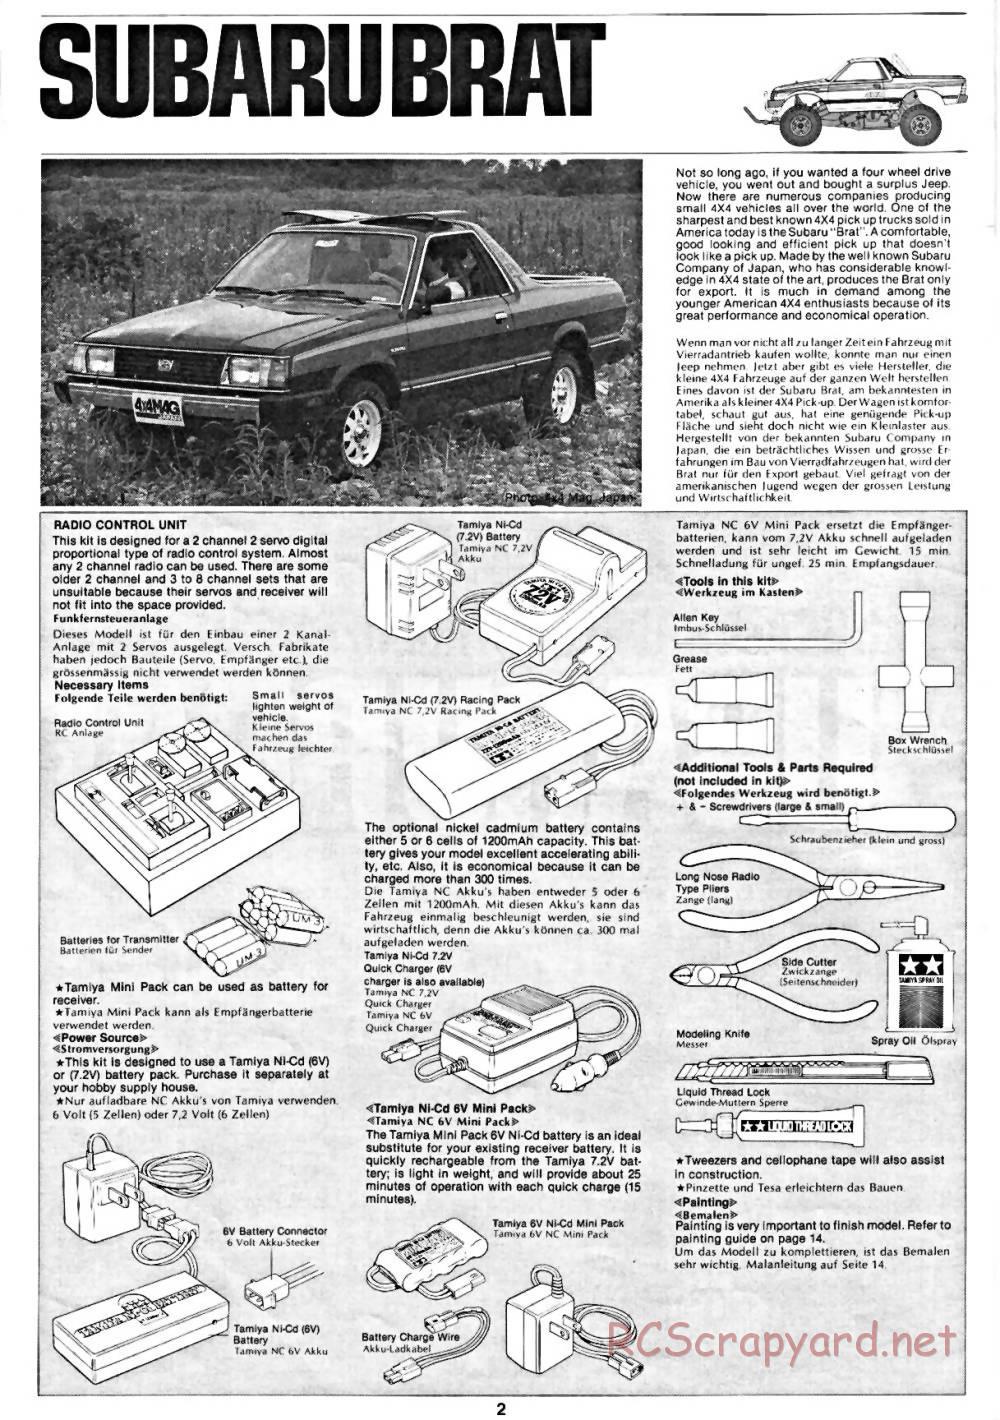 Tamiya - Subaru Brat - 58038 - Manual - Page 2